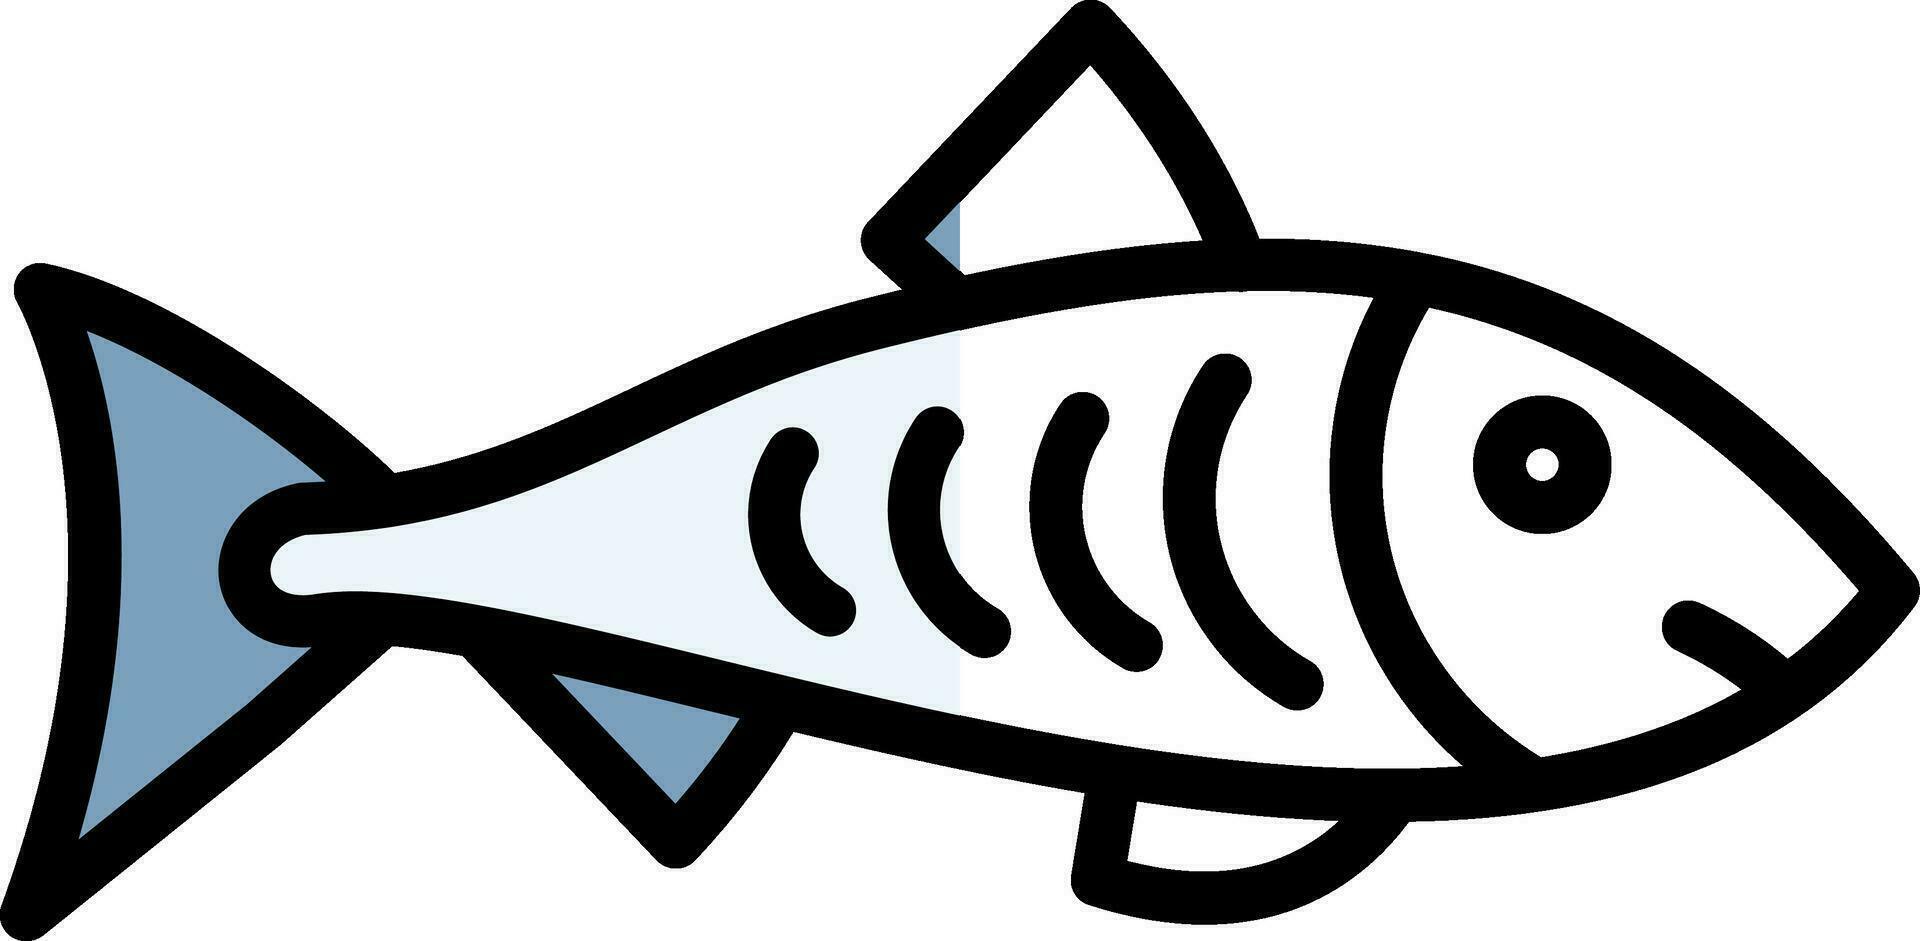 Salmon Vector Icon Design